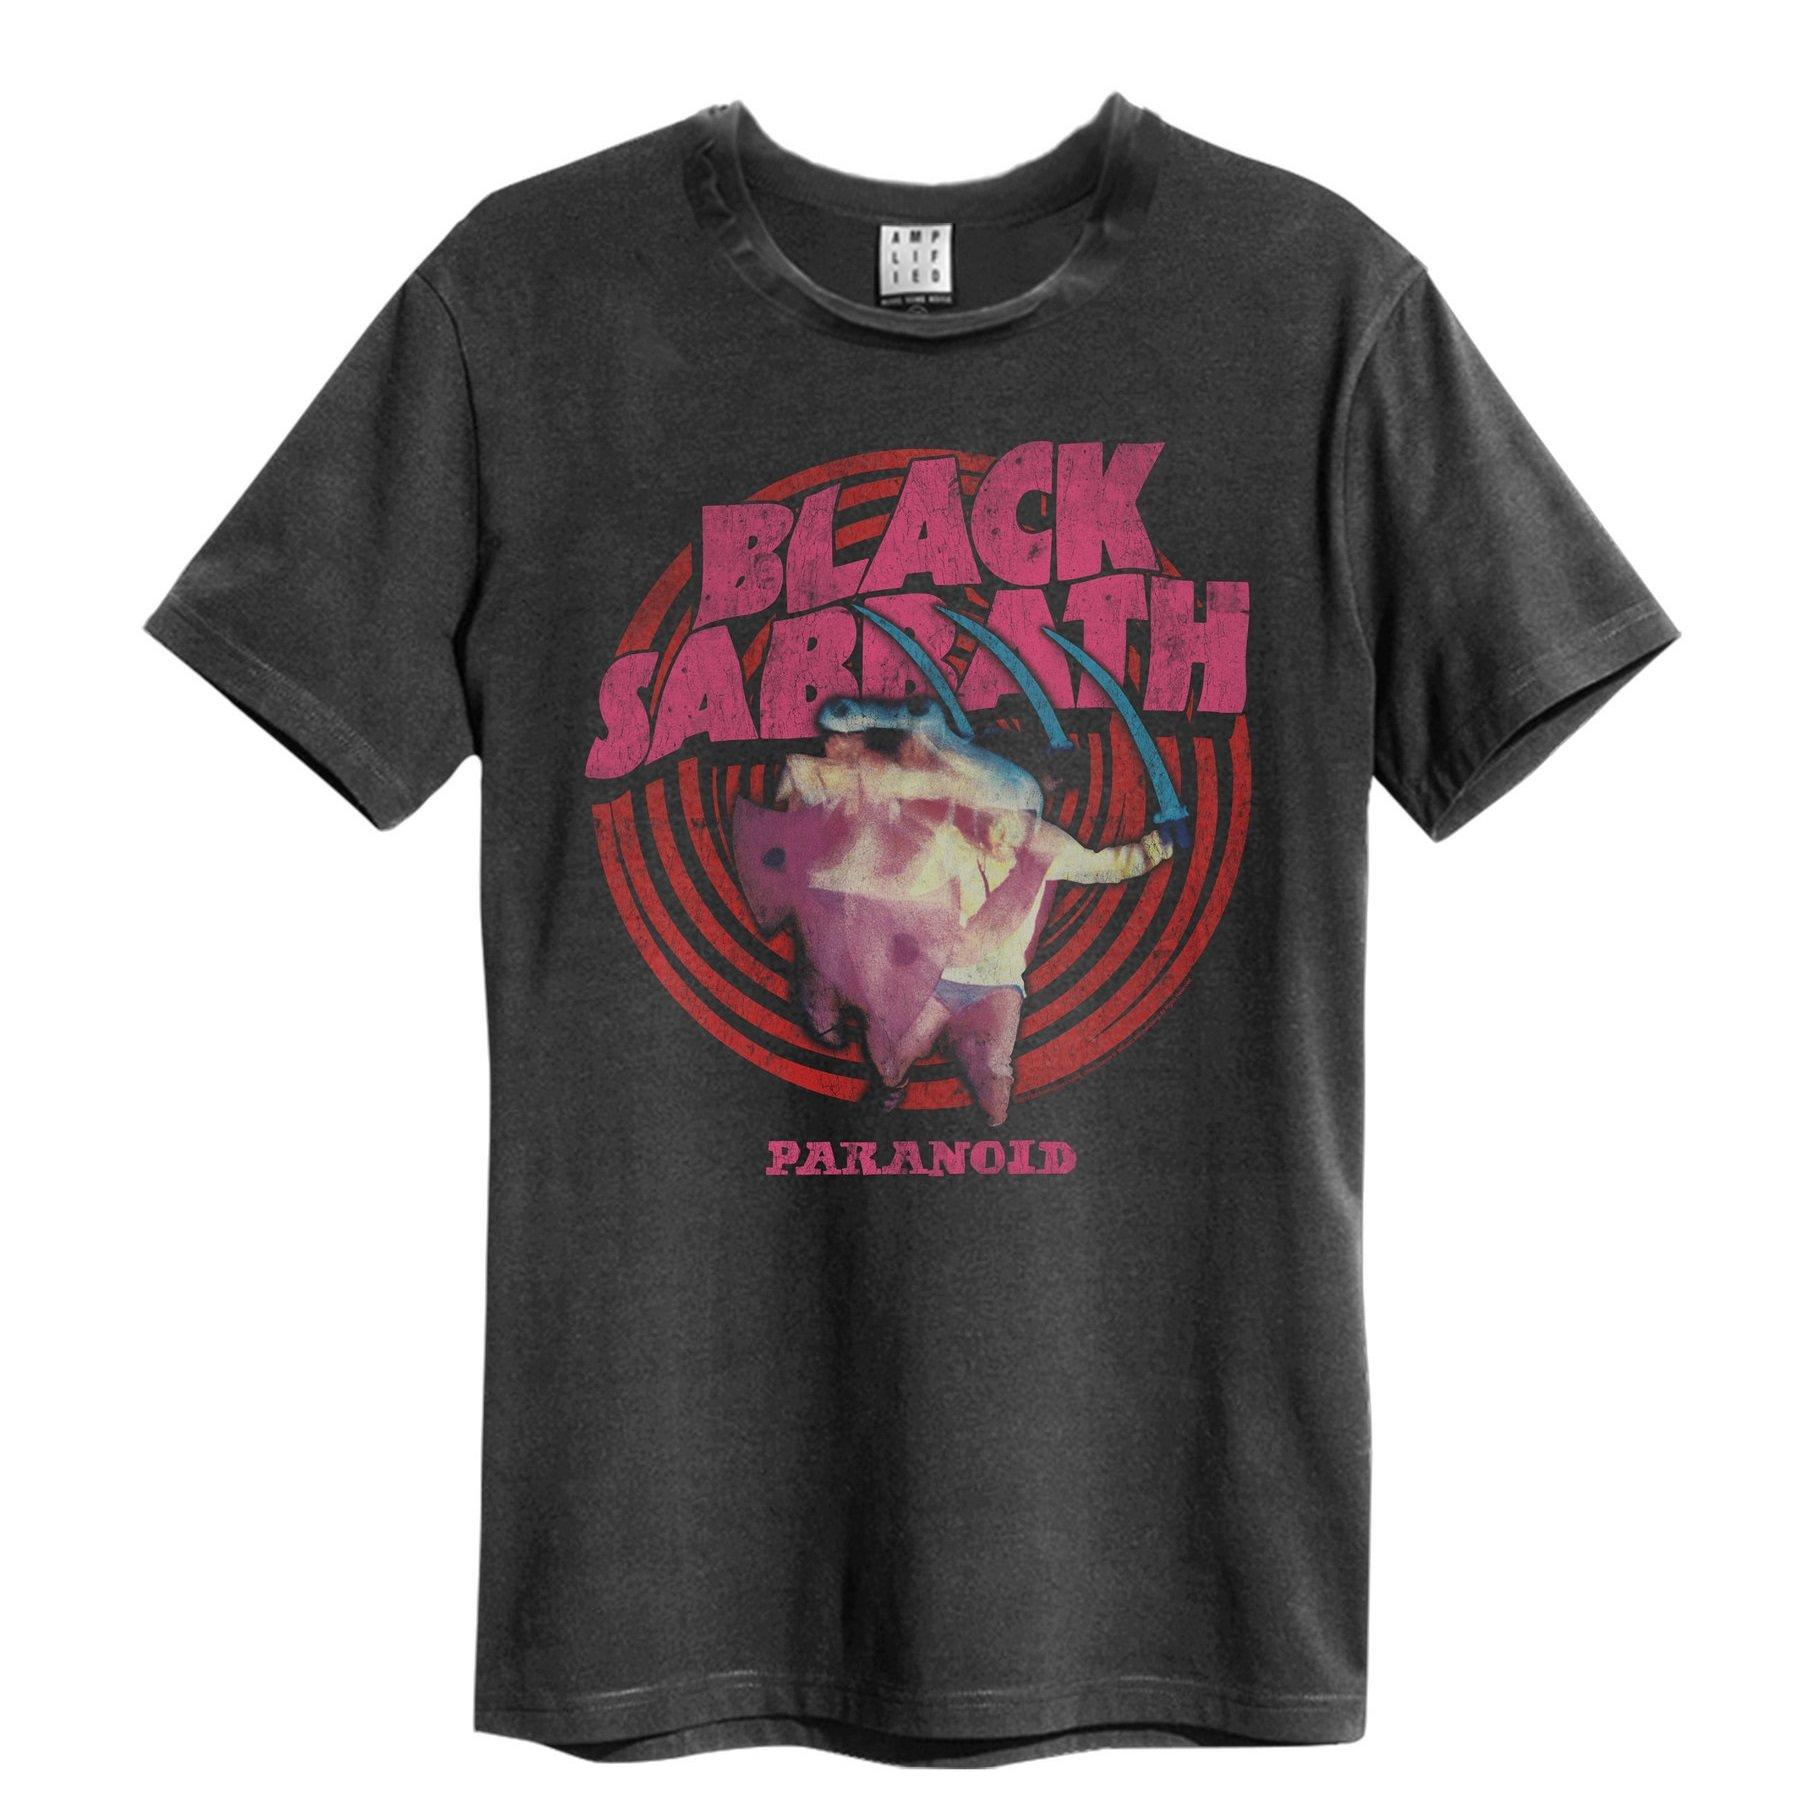 "black Sabbath Paranoid" Tshirt Damen Charcoal Black S von Amplified